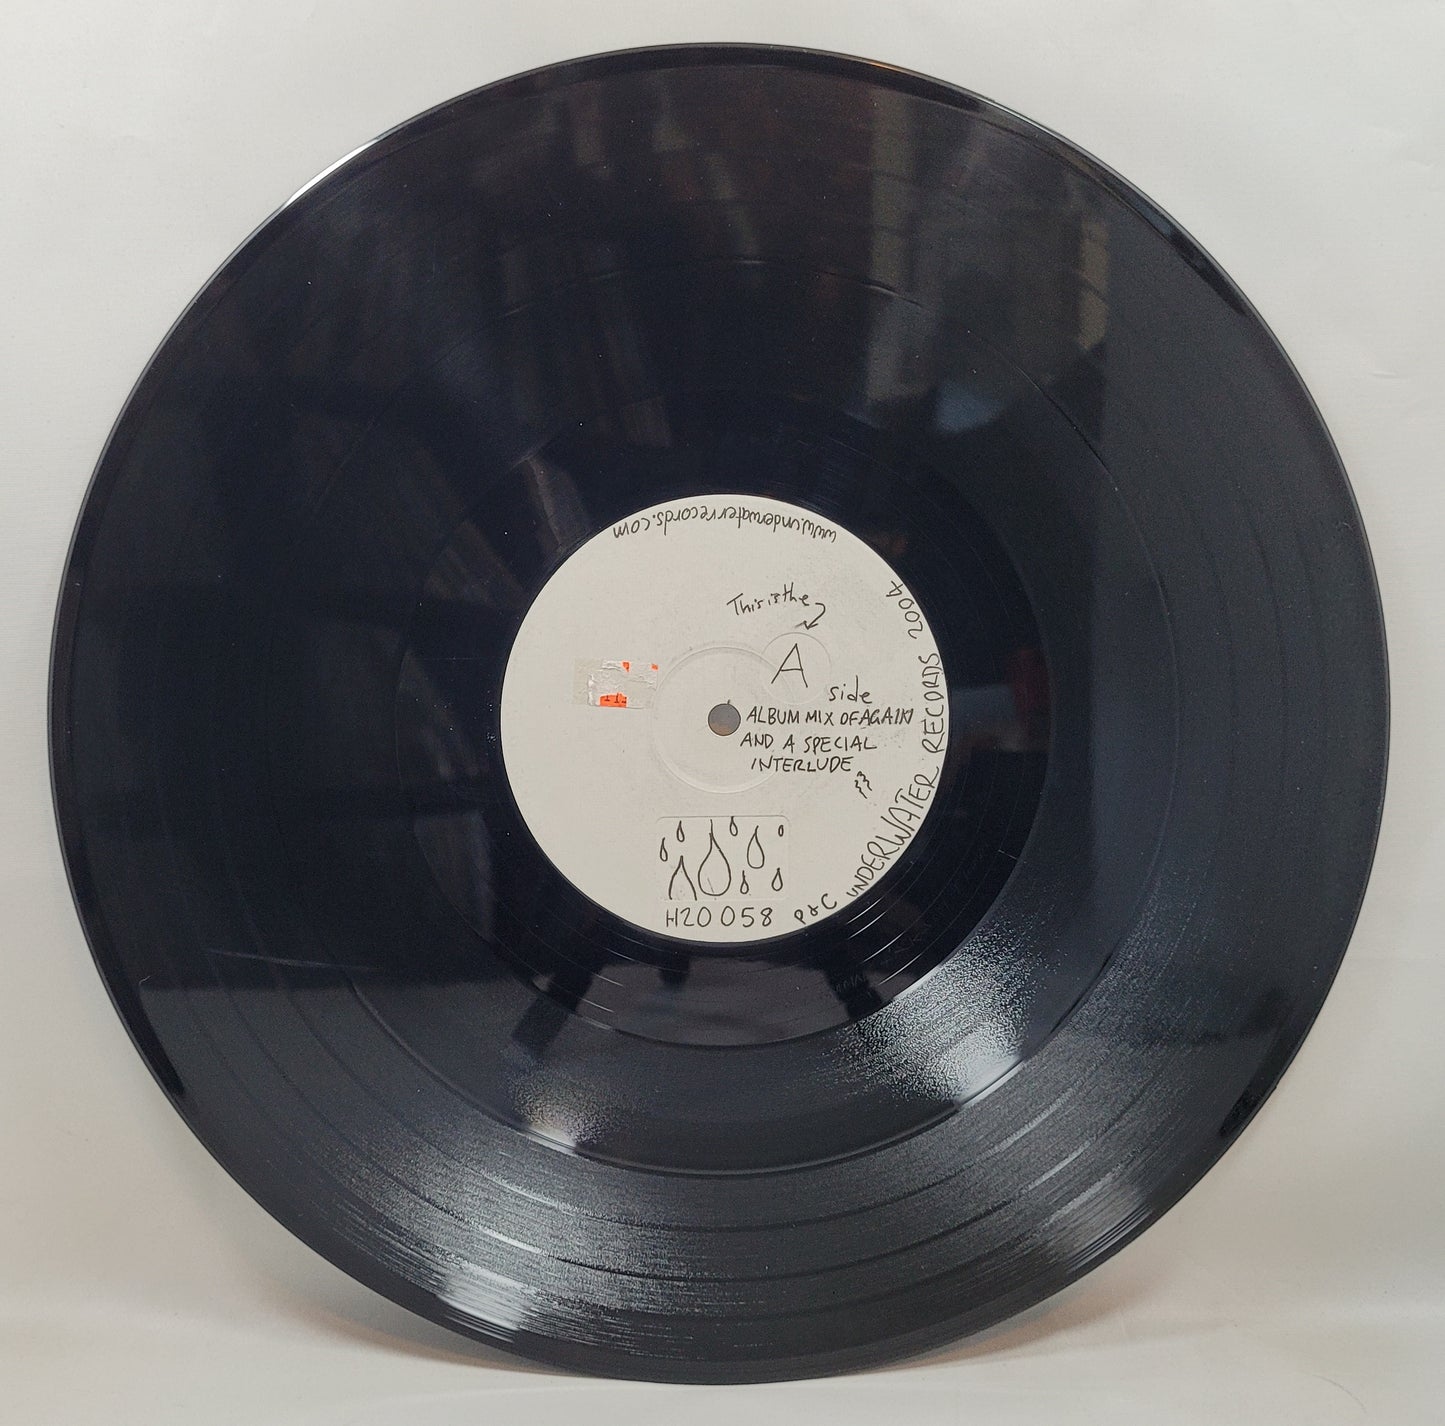 Pnau - Again [Vinyl Record 12" Single]